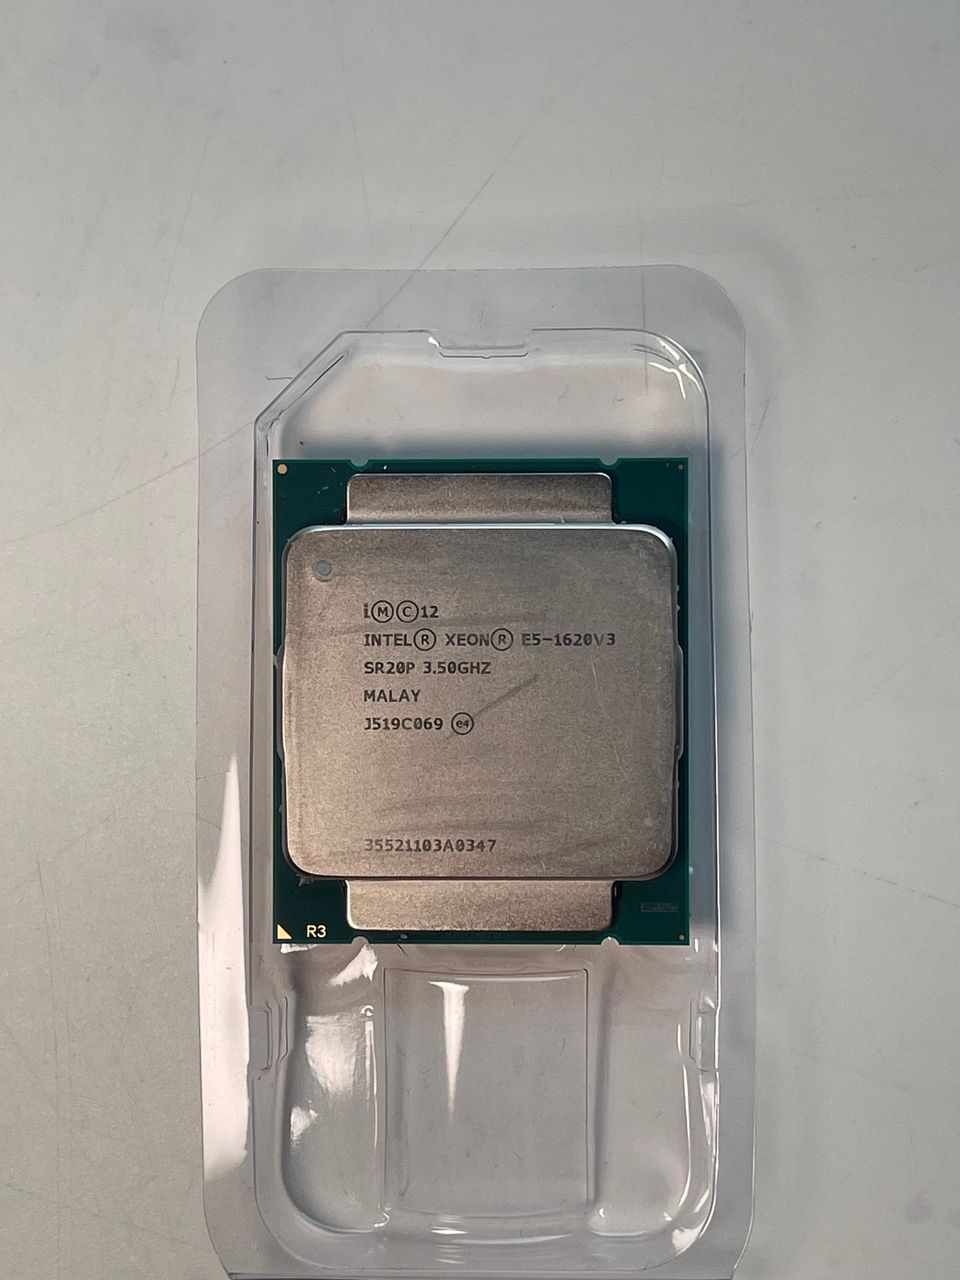 Intel Xeon E5-1620 v3 FCLGA2011